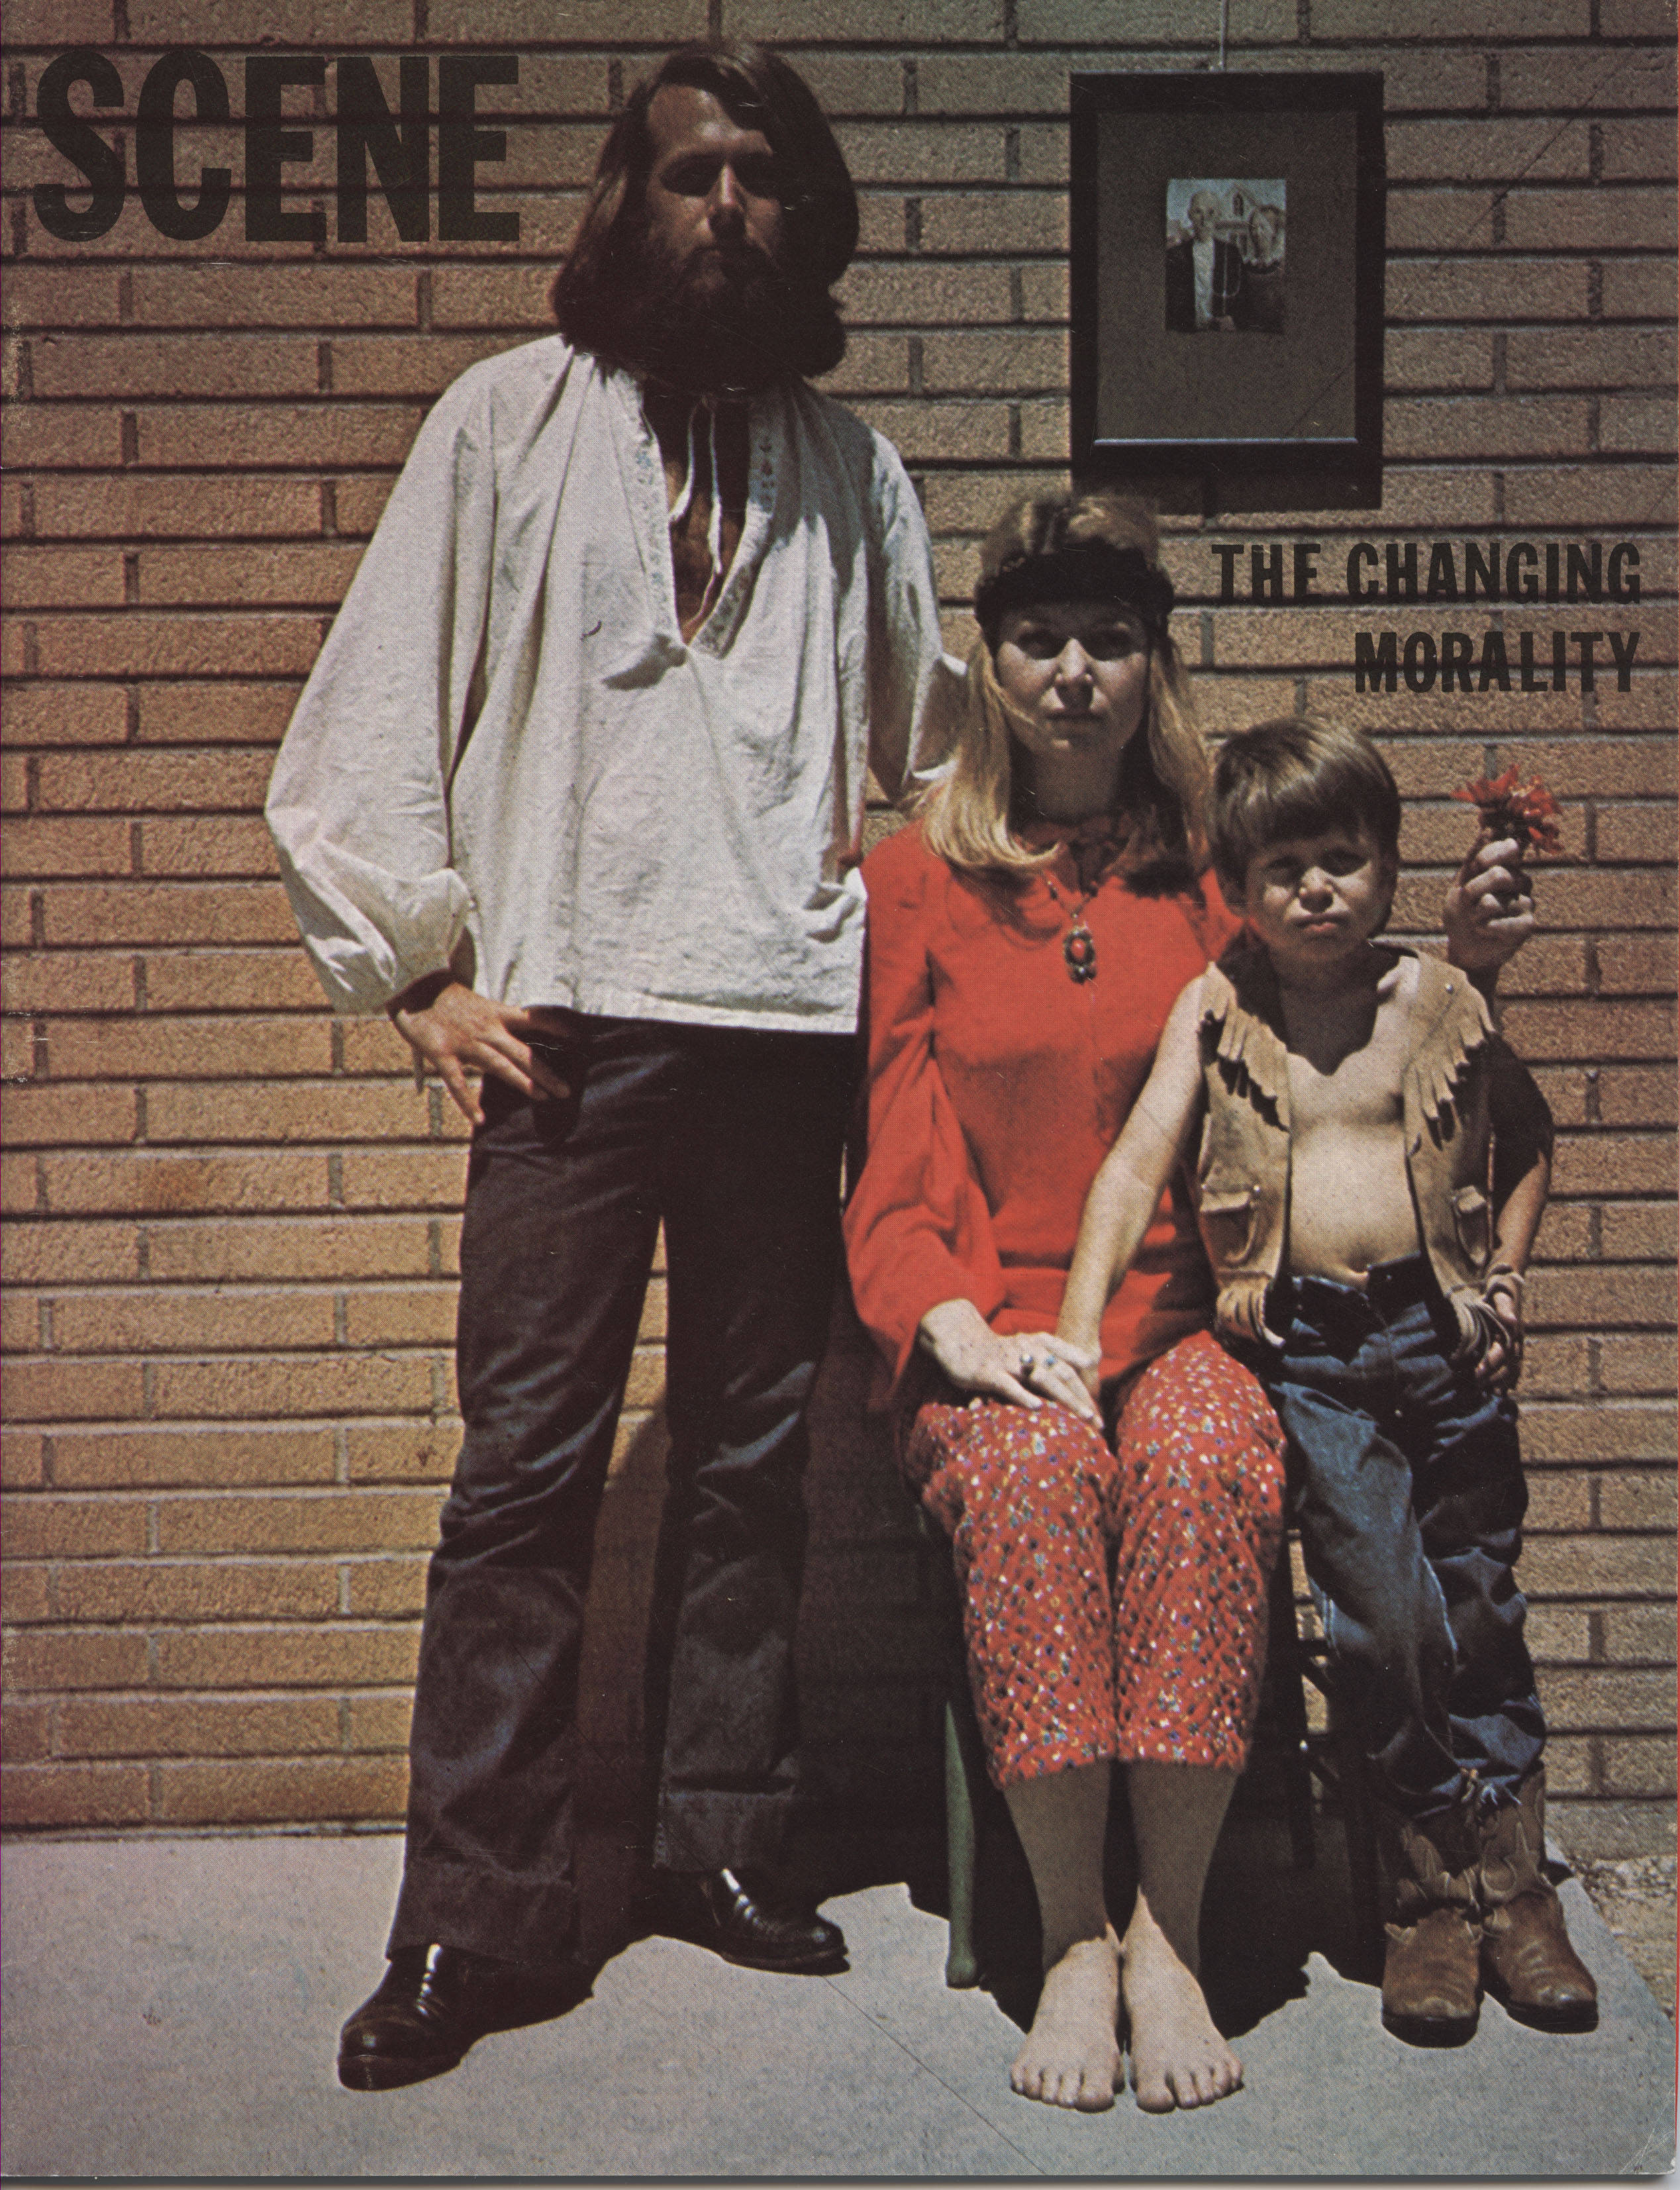 Cover for Scene magazine, 1970